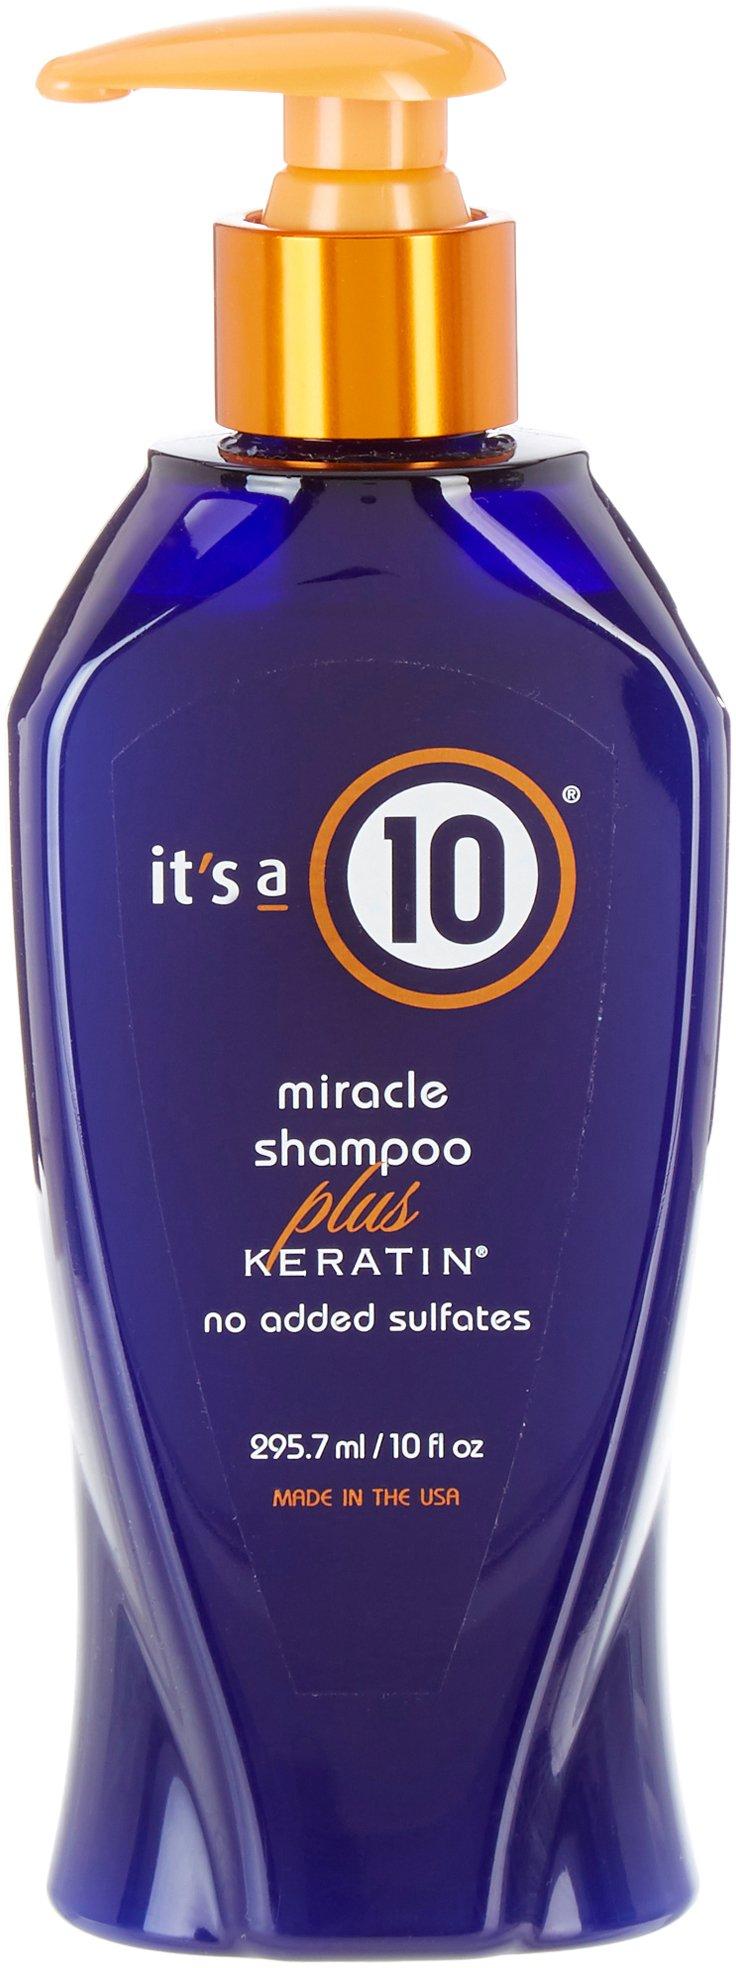 It's A 10 10 oz Miracle Shampoo Plus Keratin